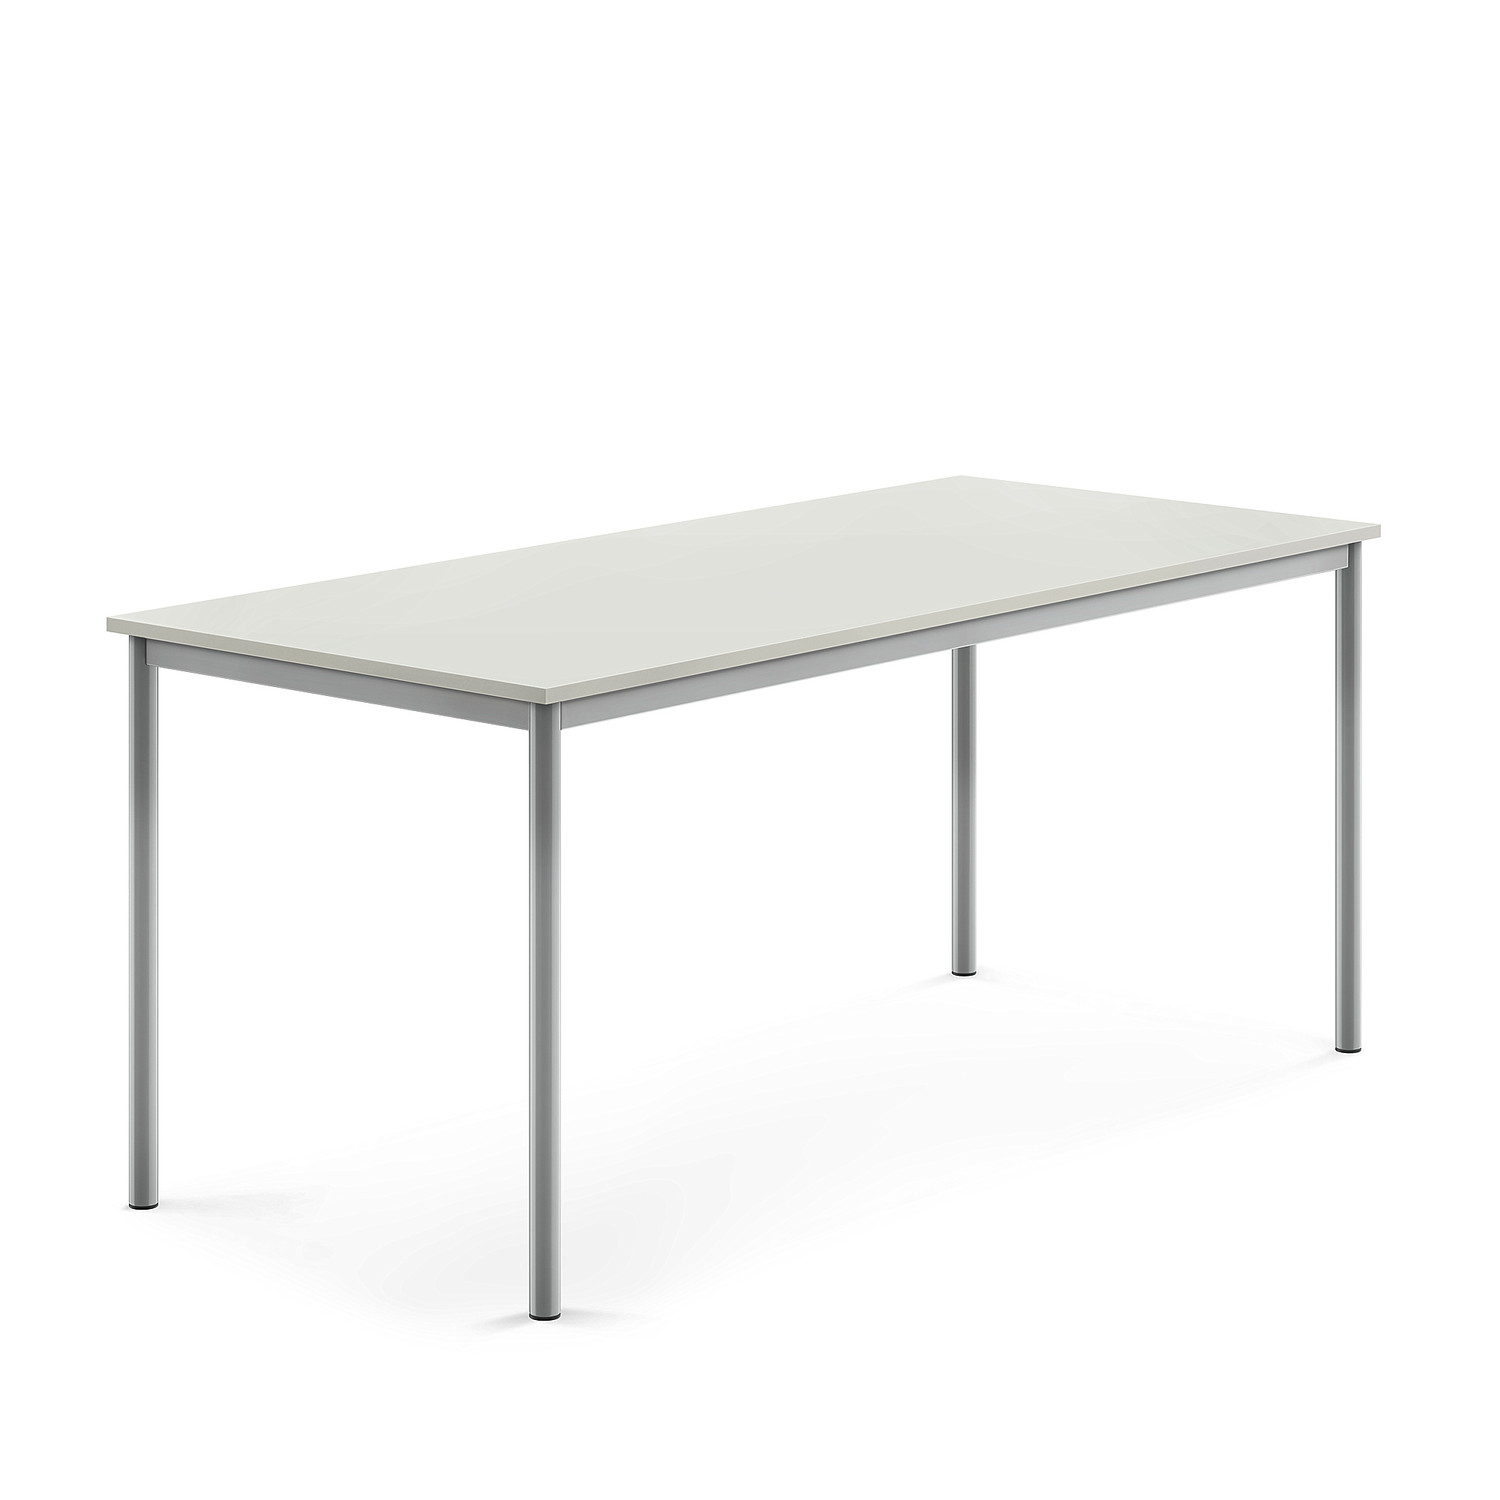 Stůl BORÅS, 1800x800x760 mm, stříbrné nohy, HPL deska, šedá